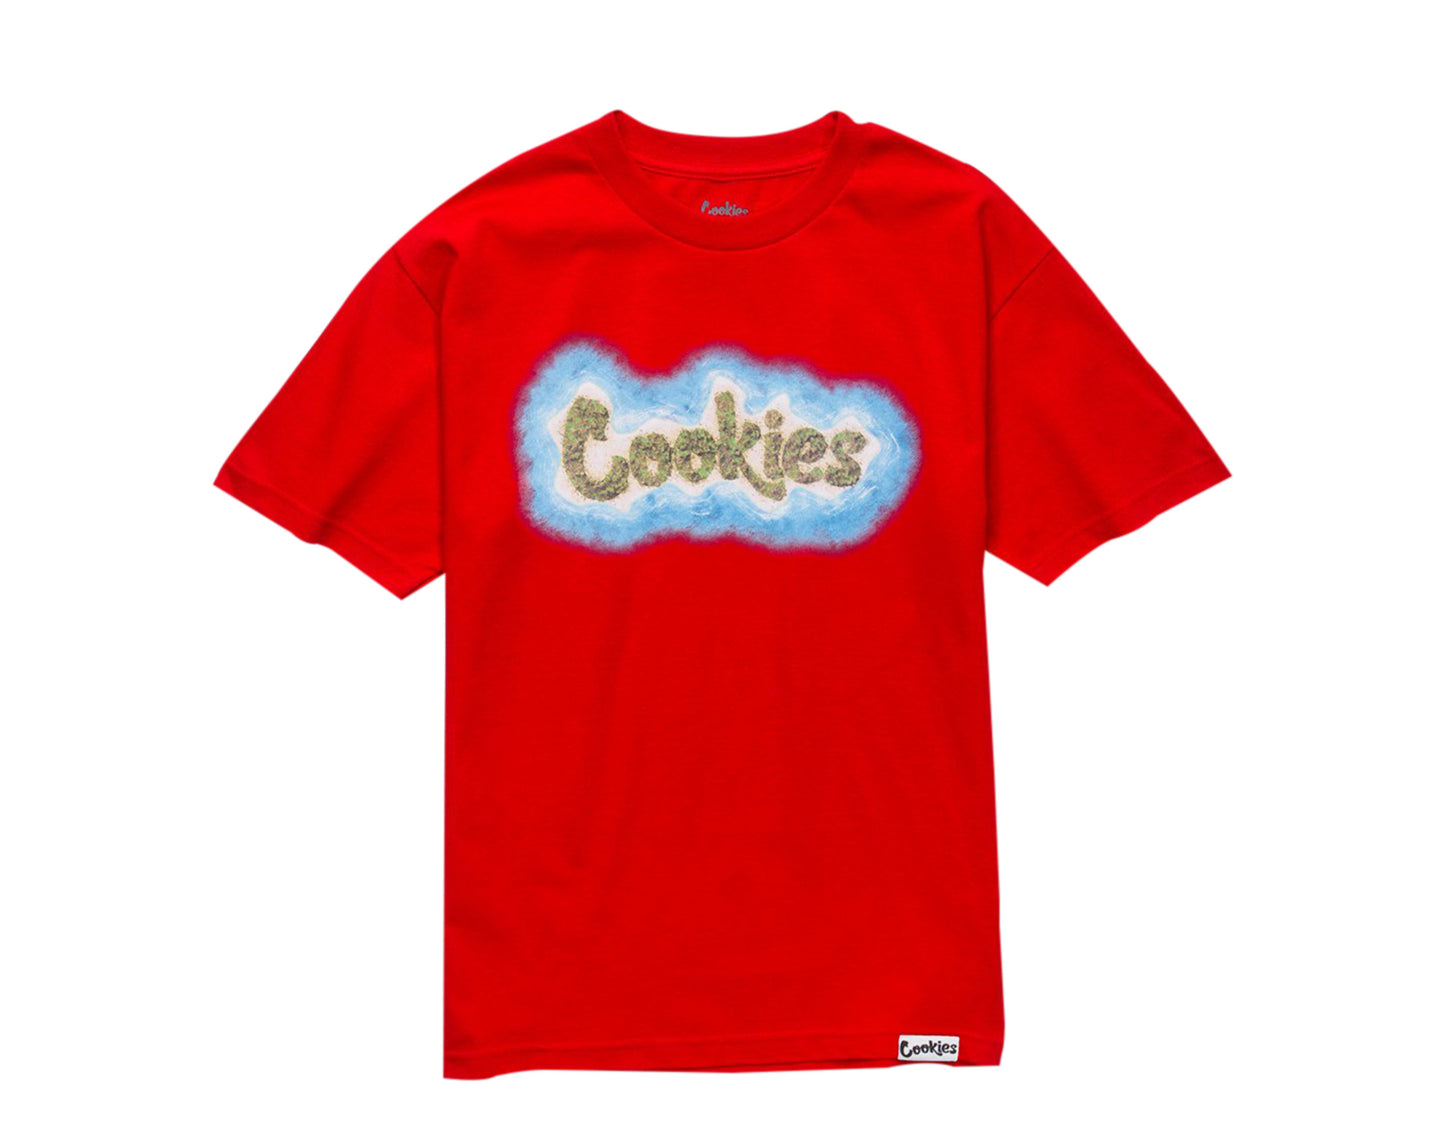 Cookies Island Red Men's Tee Shirt 1540T3727-RED